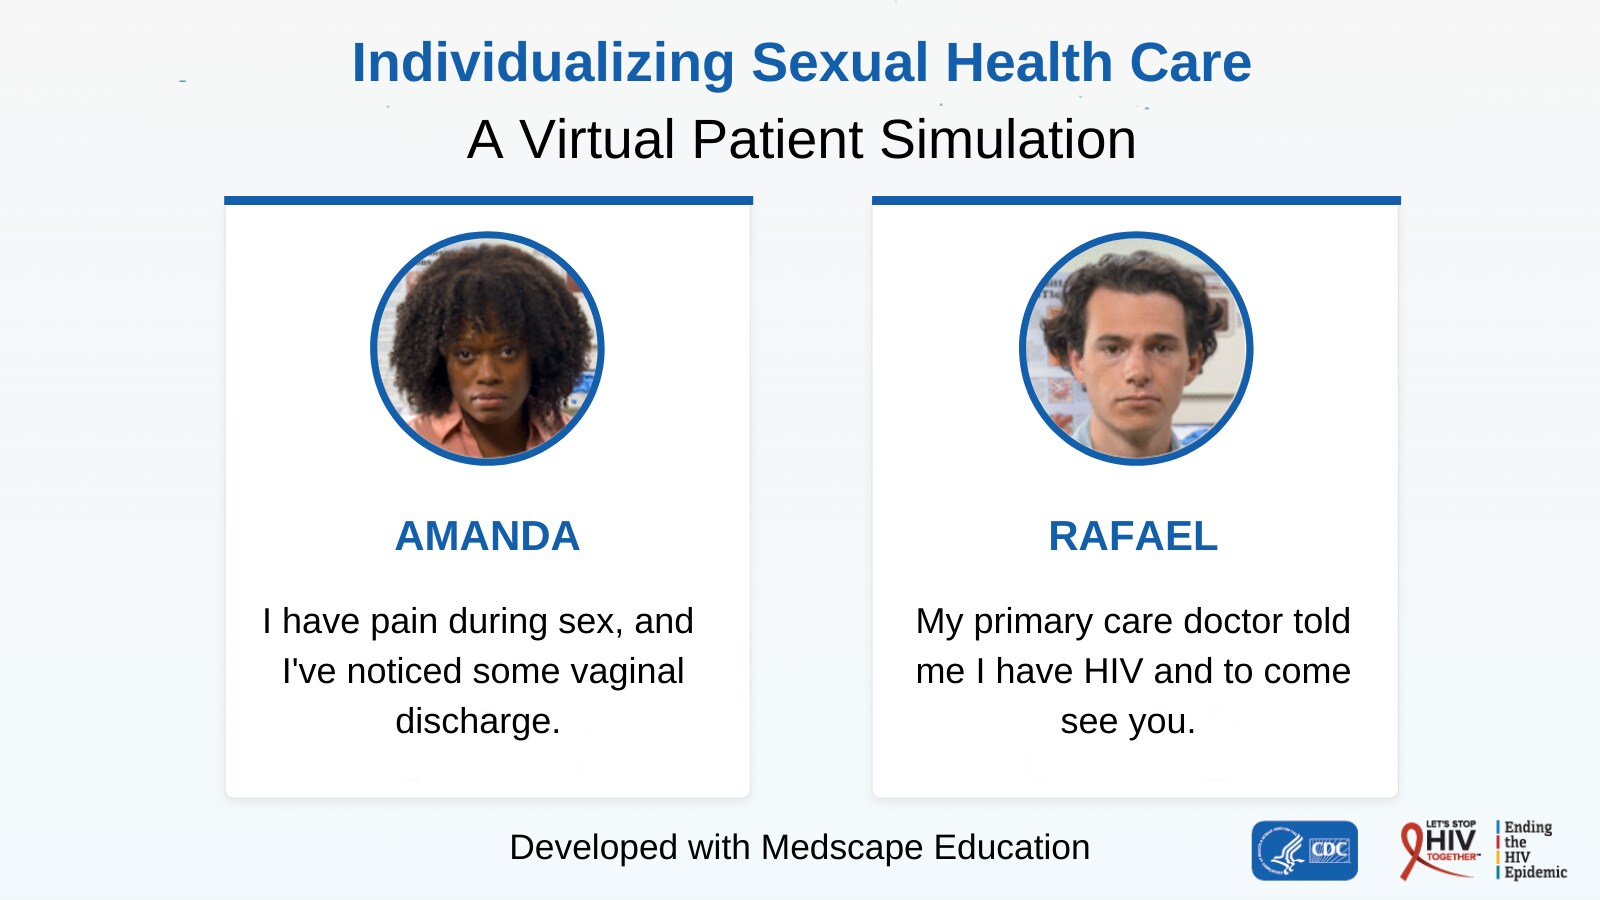 Virtual Patient SImulation image